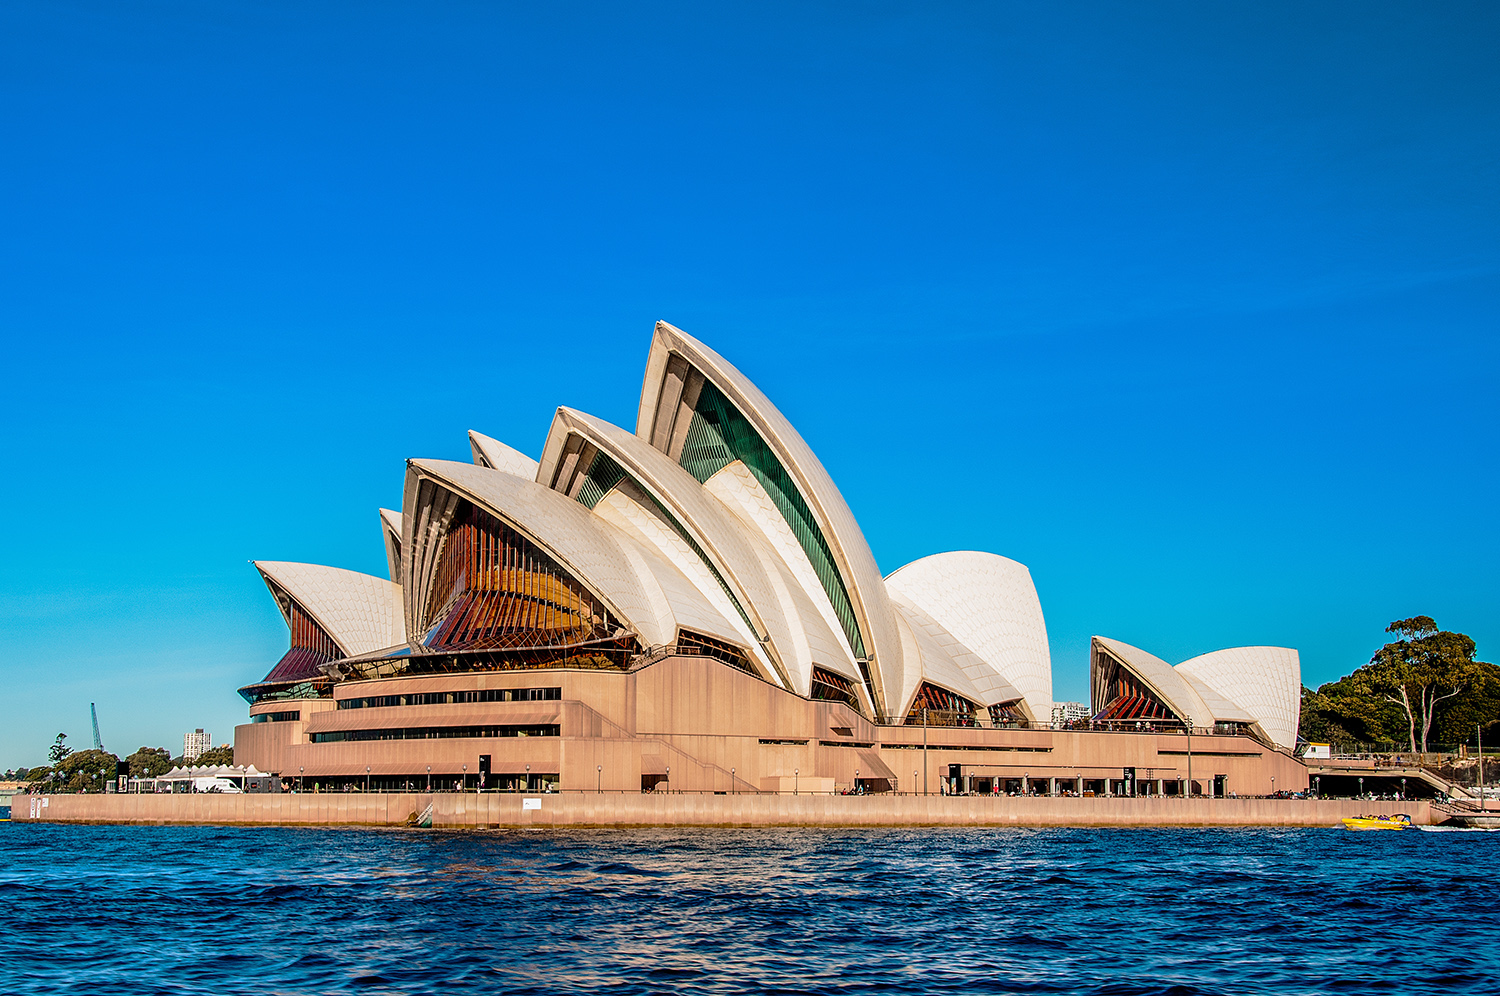 The Sydney Opera House near the beautiful sea under the clear blue sky